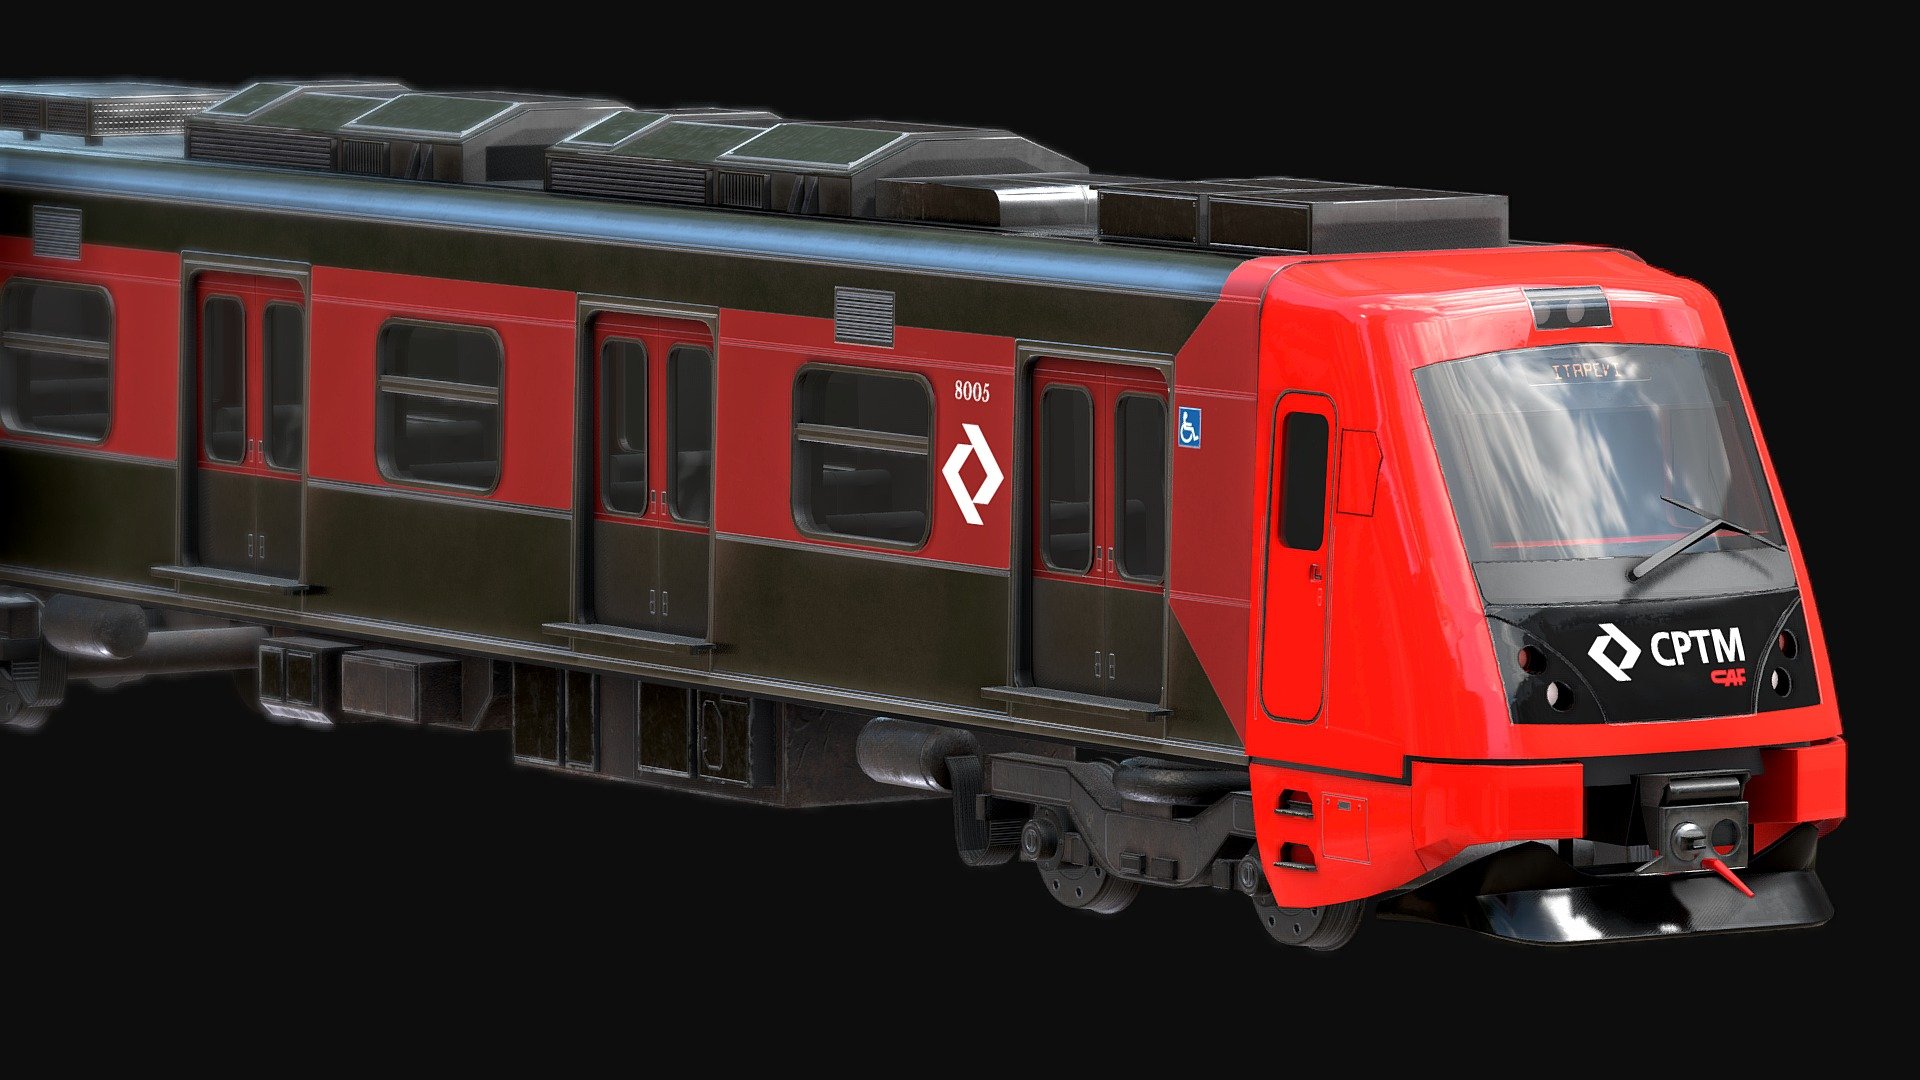 8000 Series Train - Sao Paulo - Brazil

4k Textures
Hyper Realistic
Default Metallic Texture Set
Blender native file 3d model